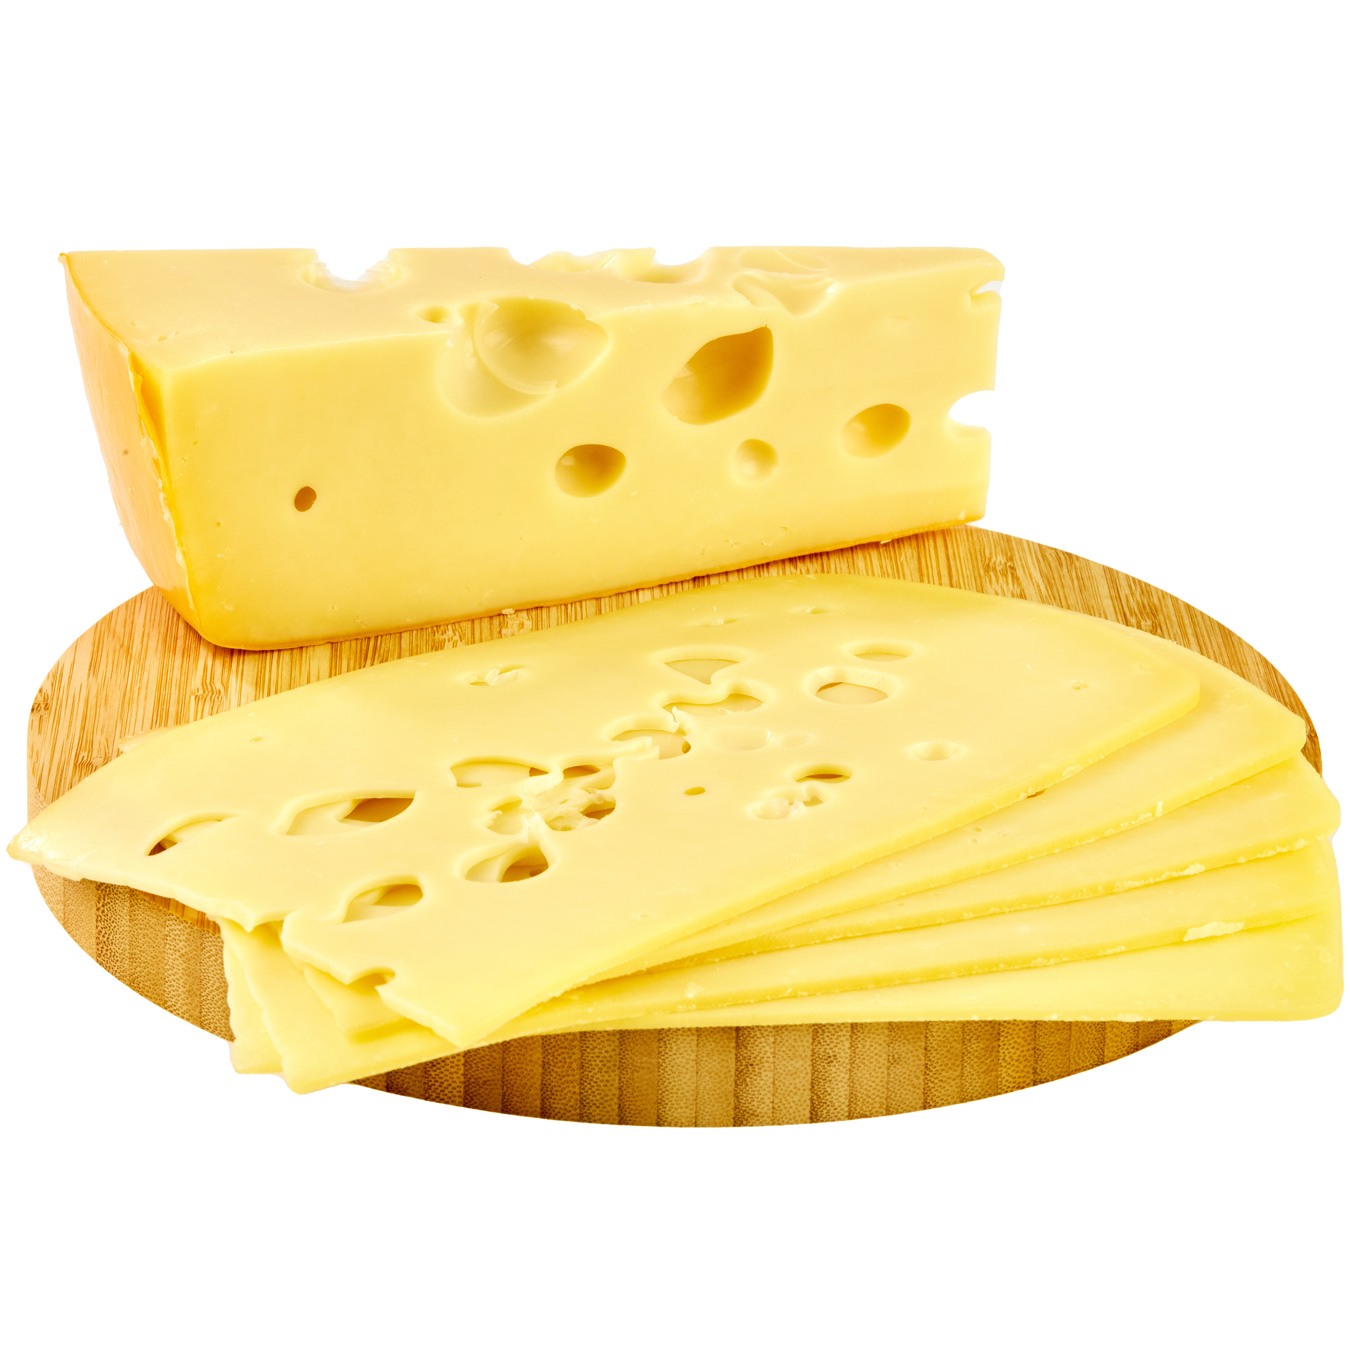 Tilbury Mazdamer Cheese 45%